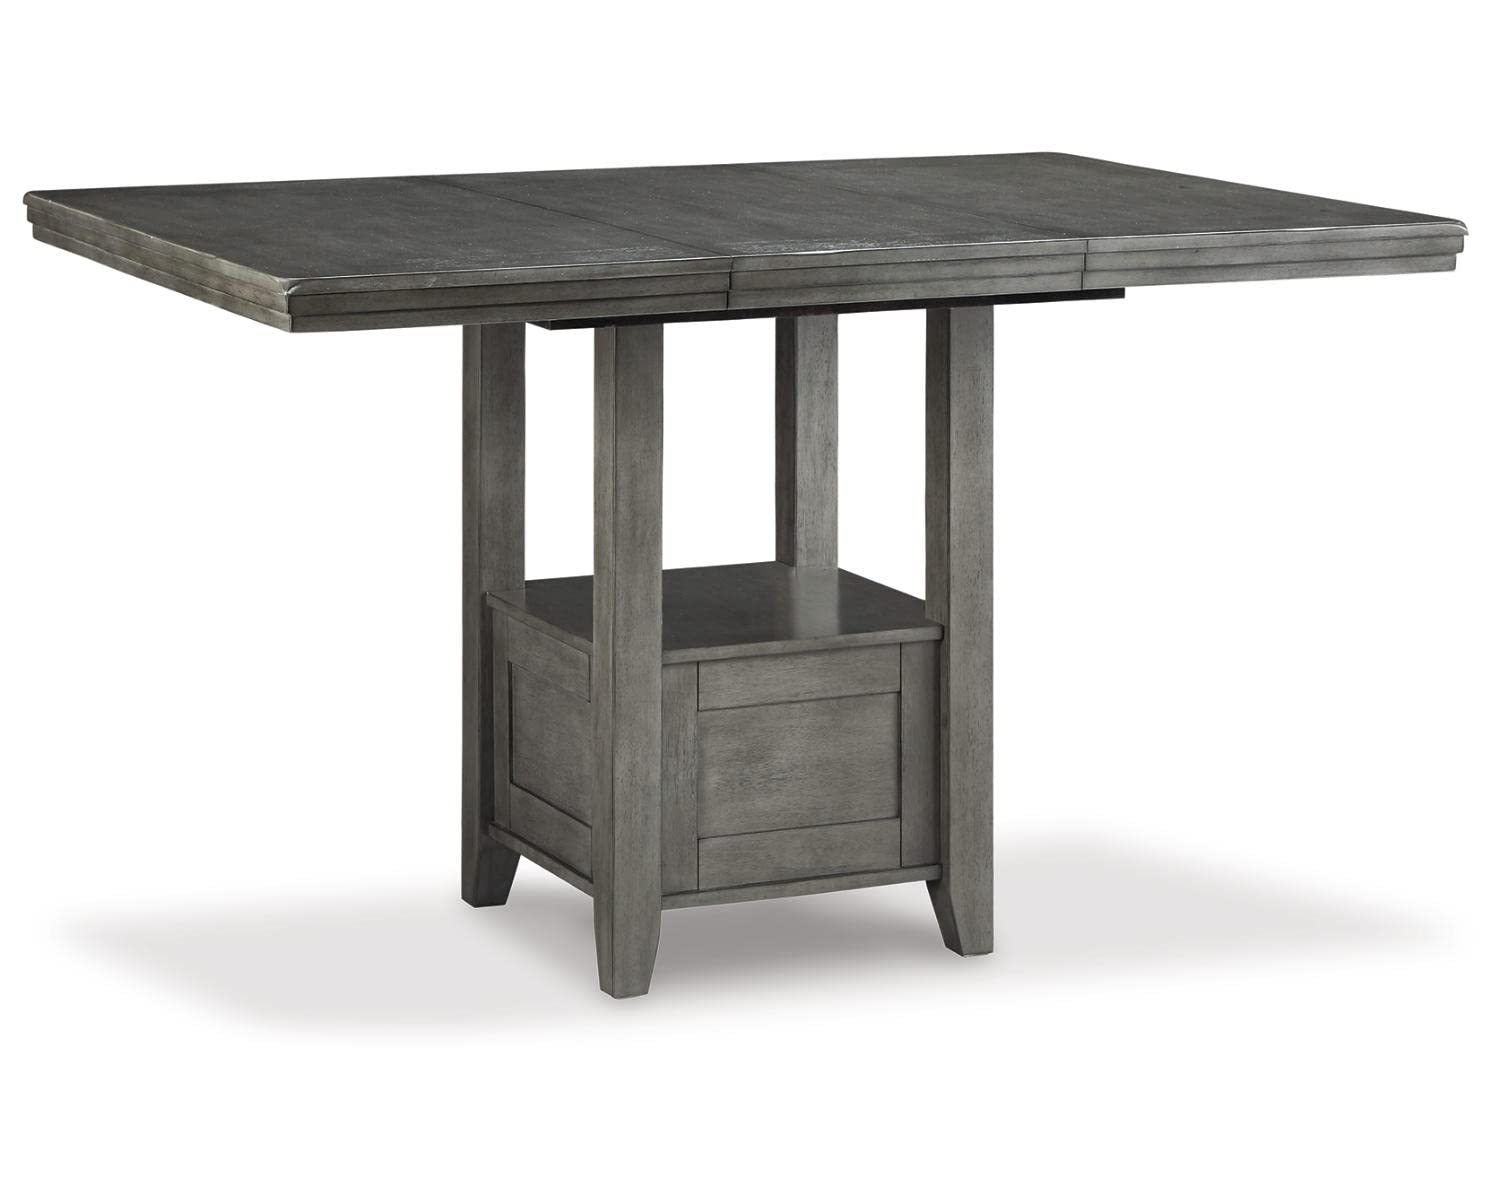 Signature Design by Ashley Hallanden Modern Farmhouse counter Height Dining Room Extension Table, Dark gray